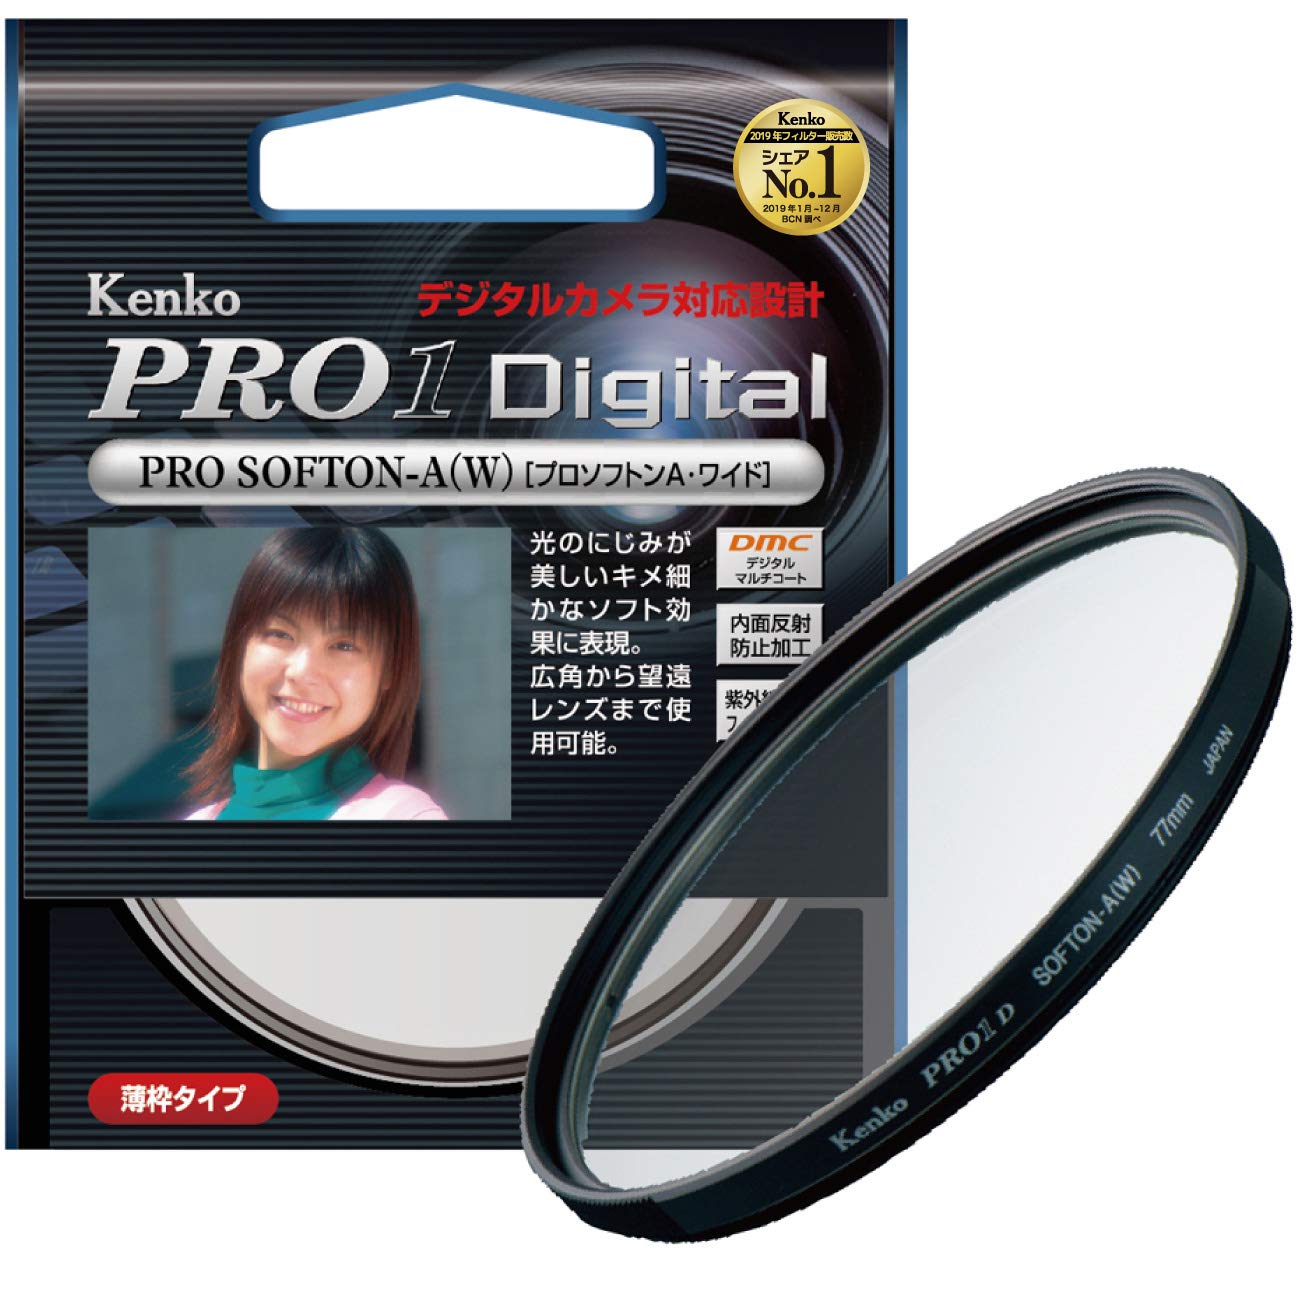 Kenko カメラ用フィルター PRO1D プロソフトン [A] (W) 77mm ソフト描写用 277881